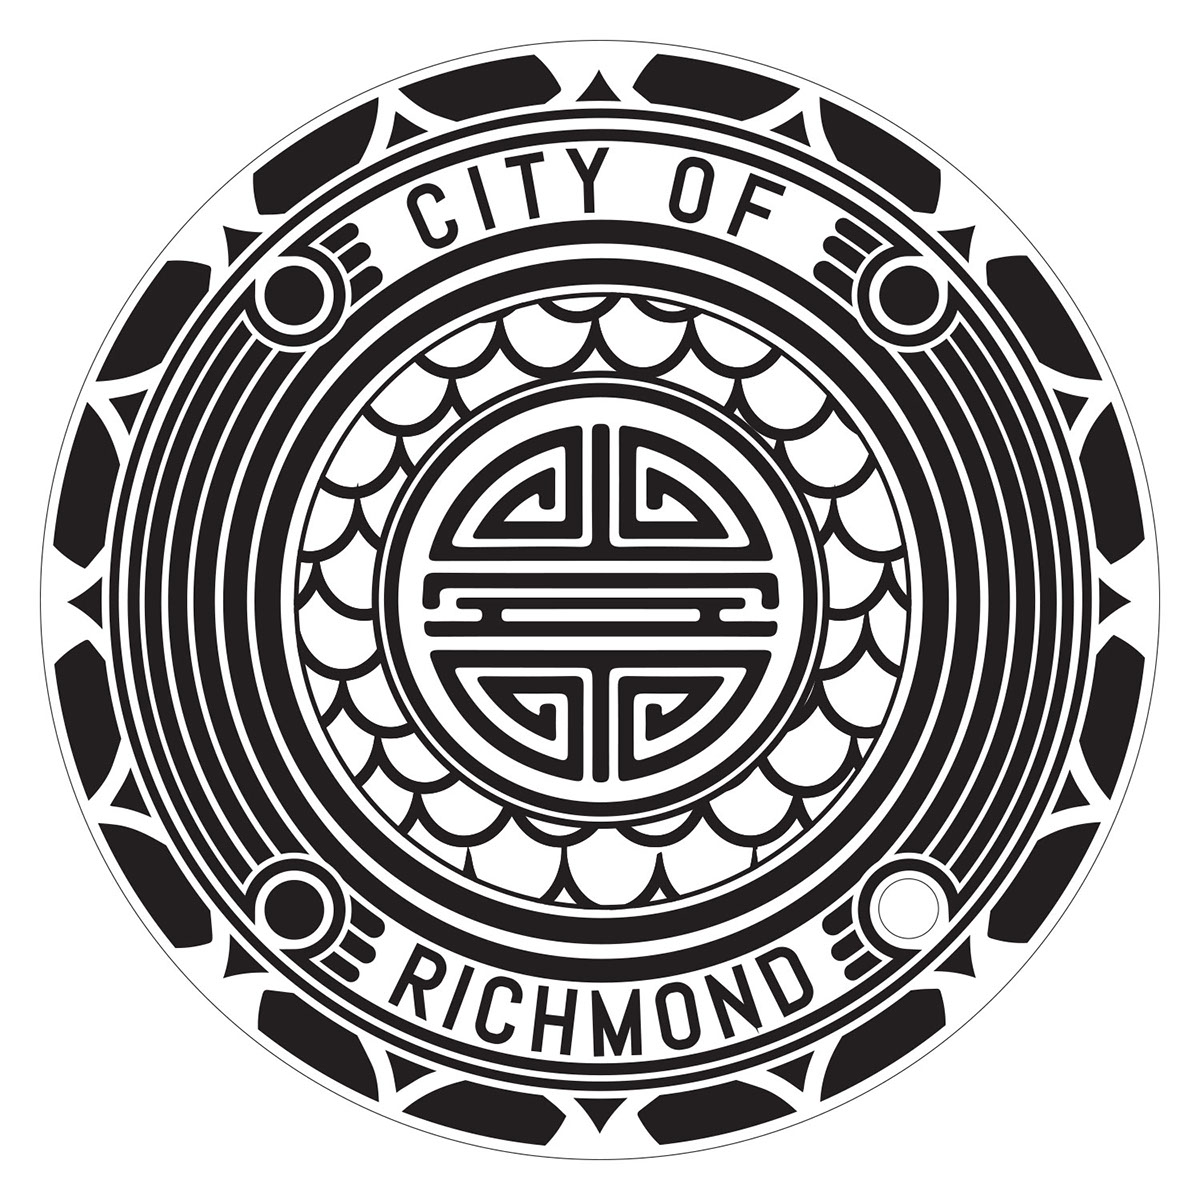 Richmond manhole cover